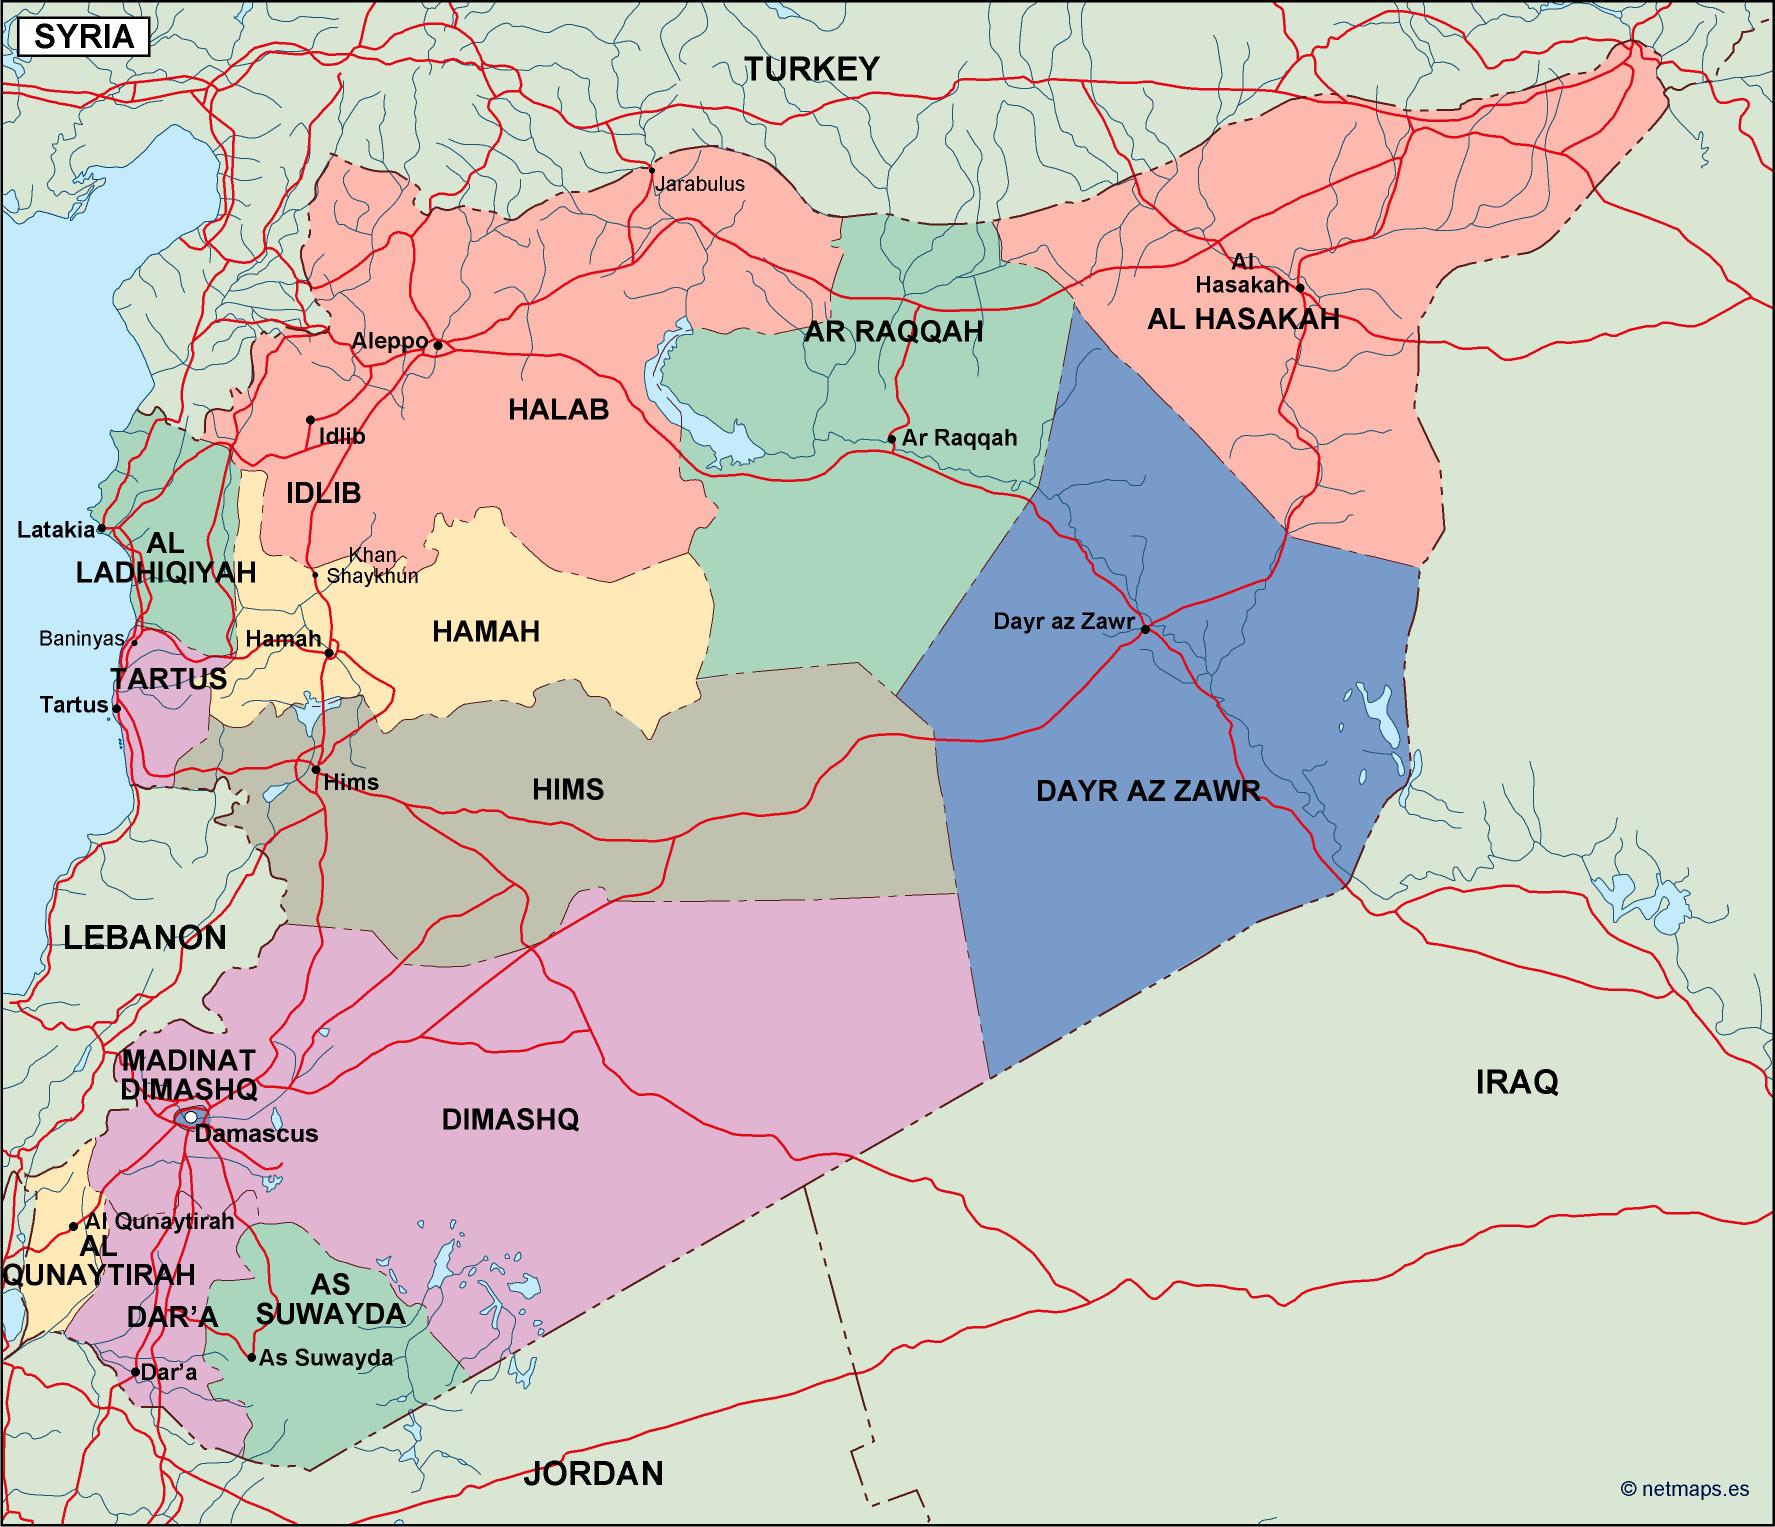 syria political map. Eps Illustrator Map Vector World Maps